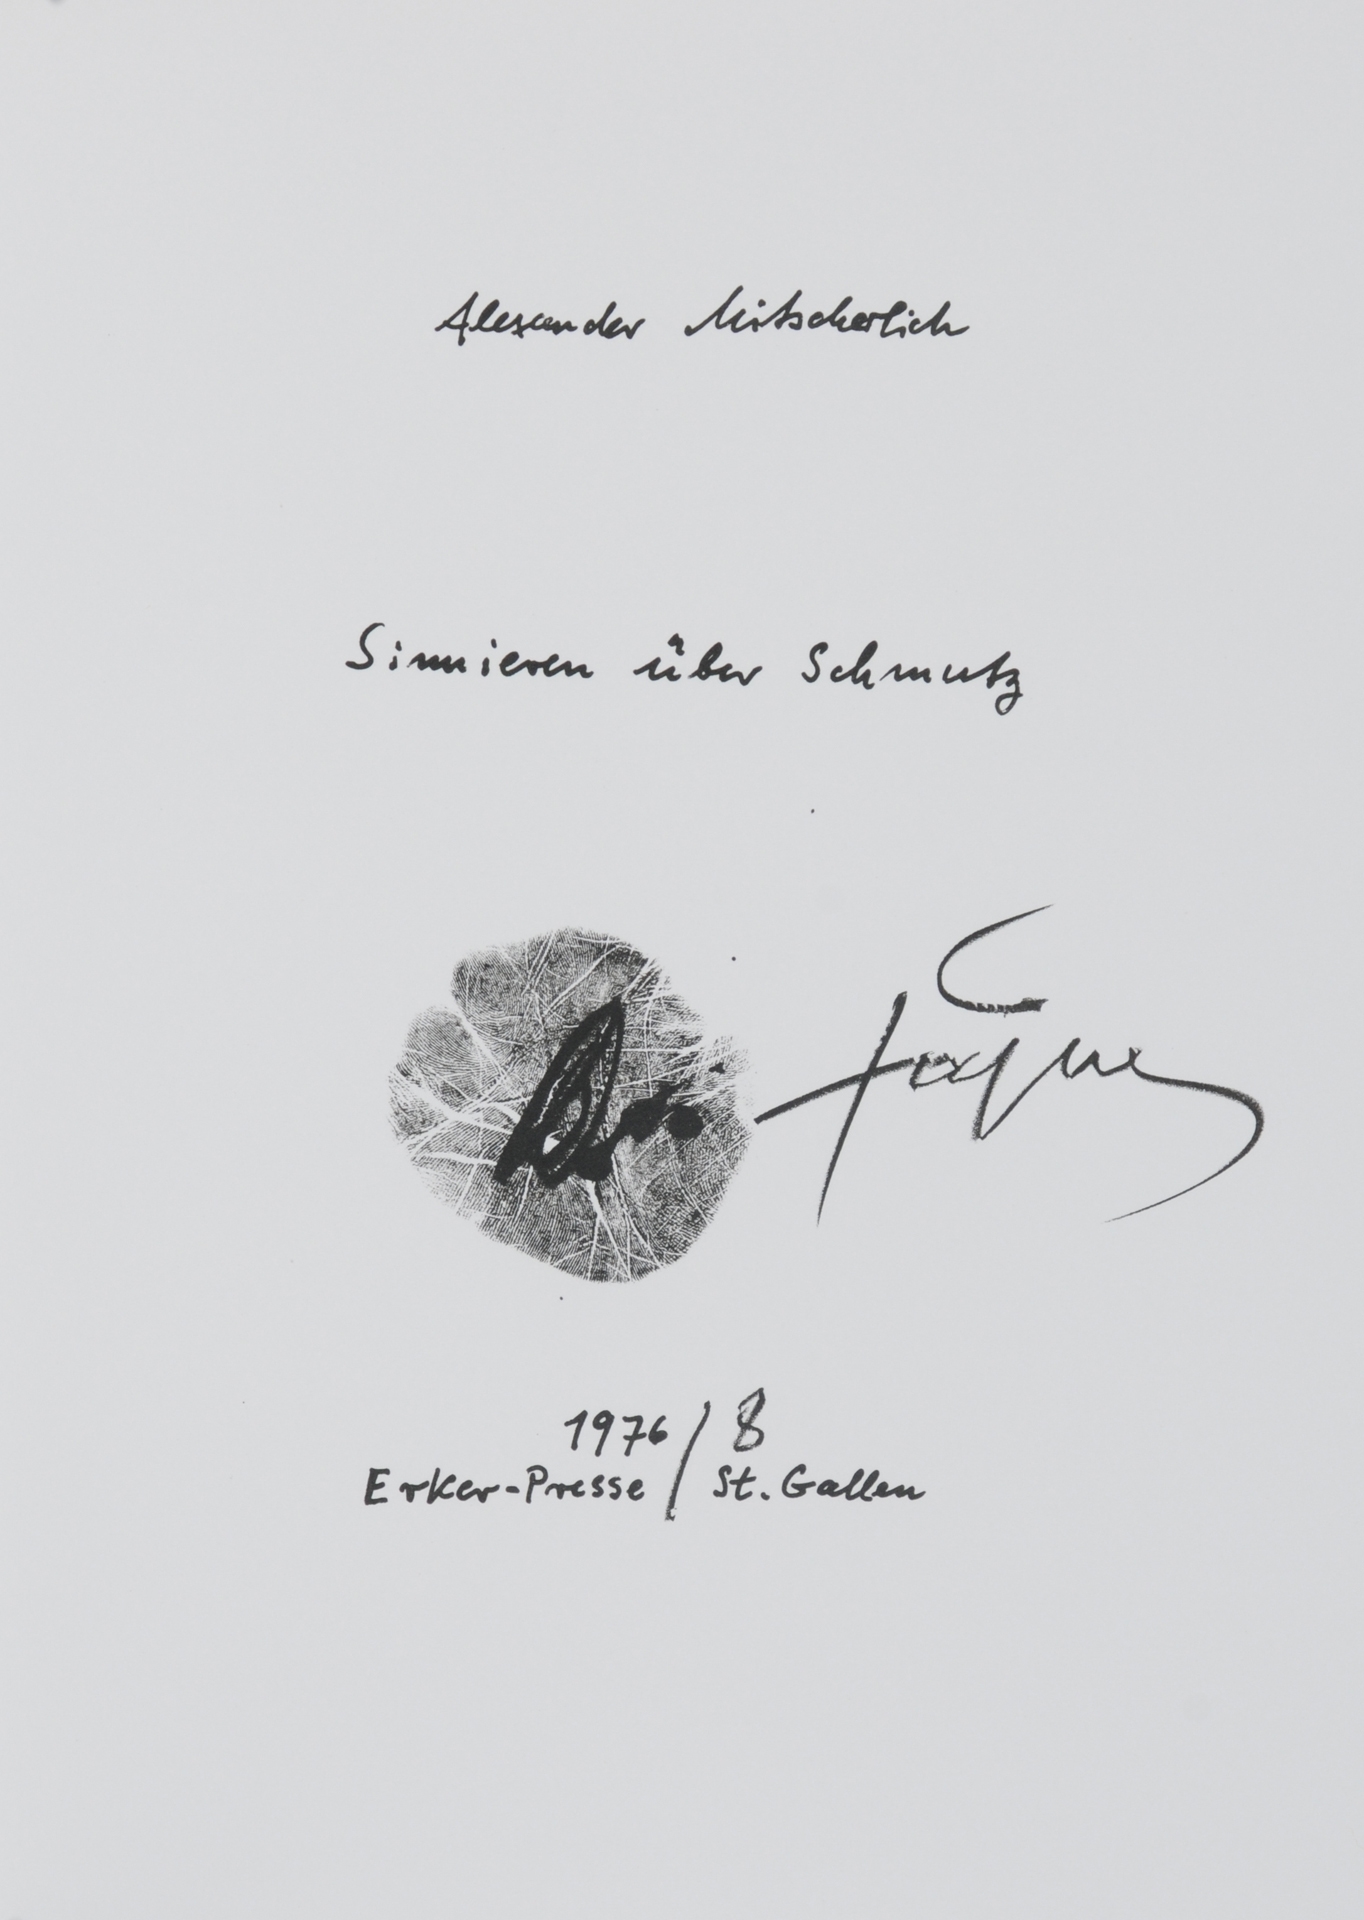 Artwork by Antoni Tàpies, Portfolio.
Sinnieren über Schmutz, Made of lithographs printed in color and